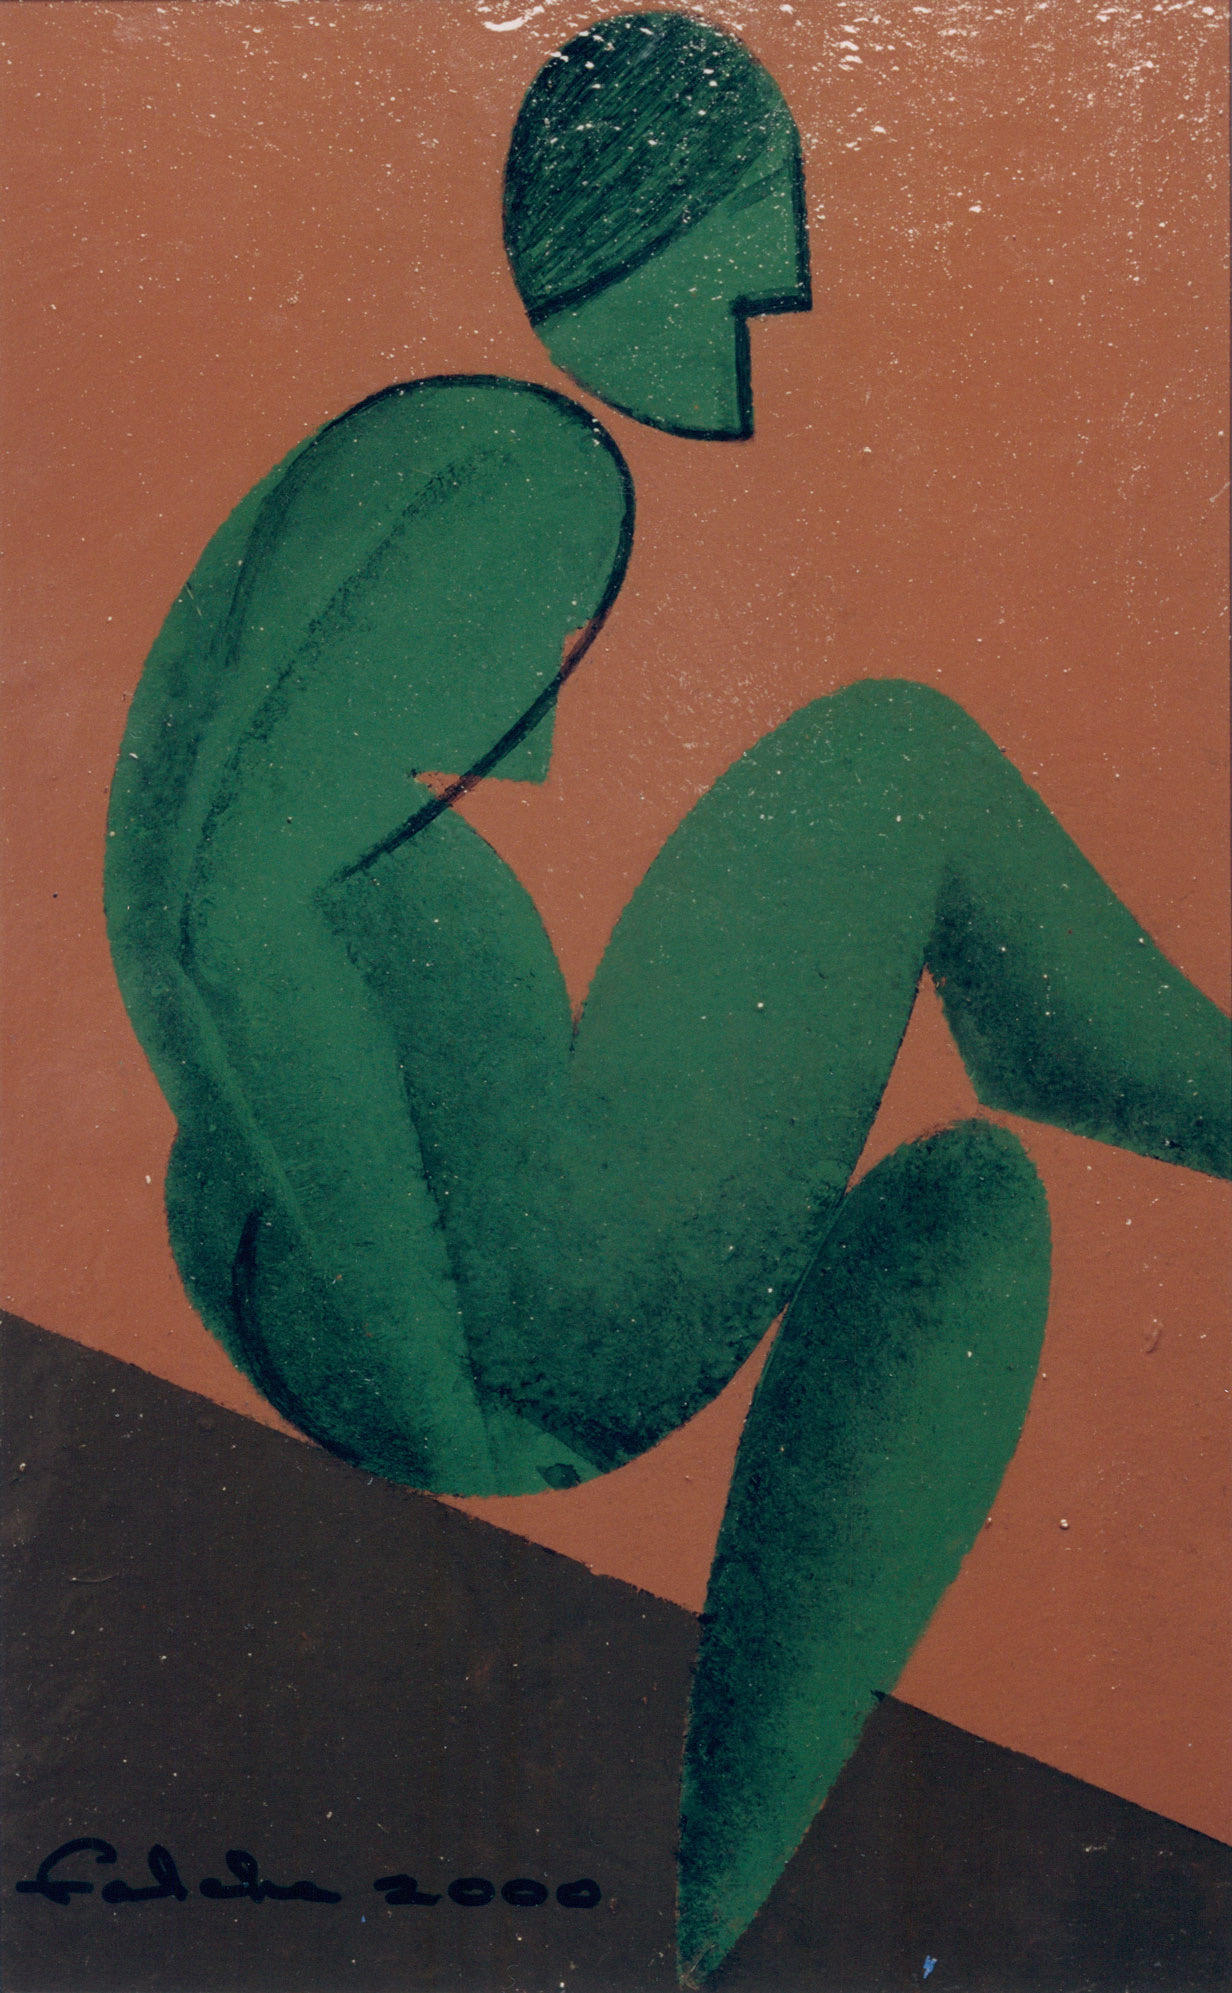 Green sitting figure